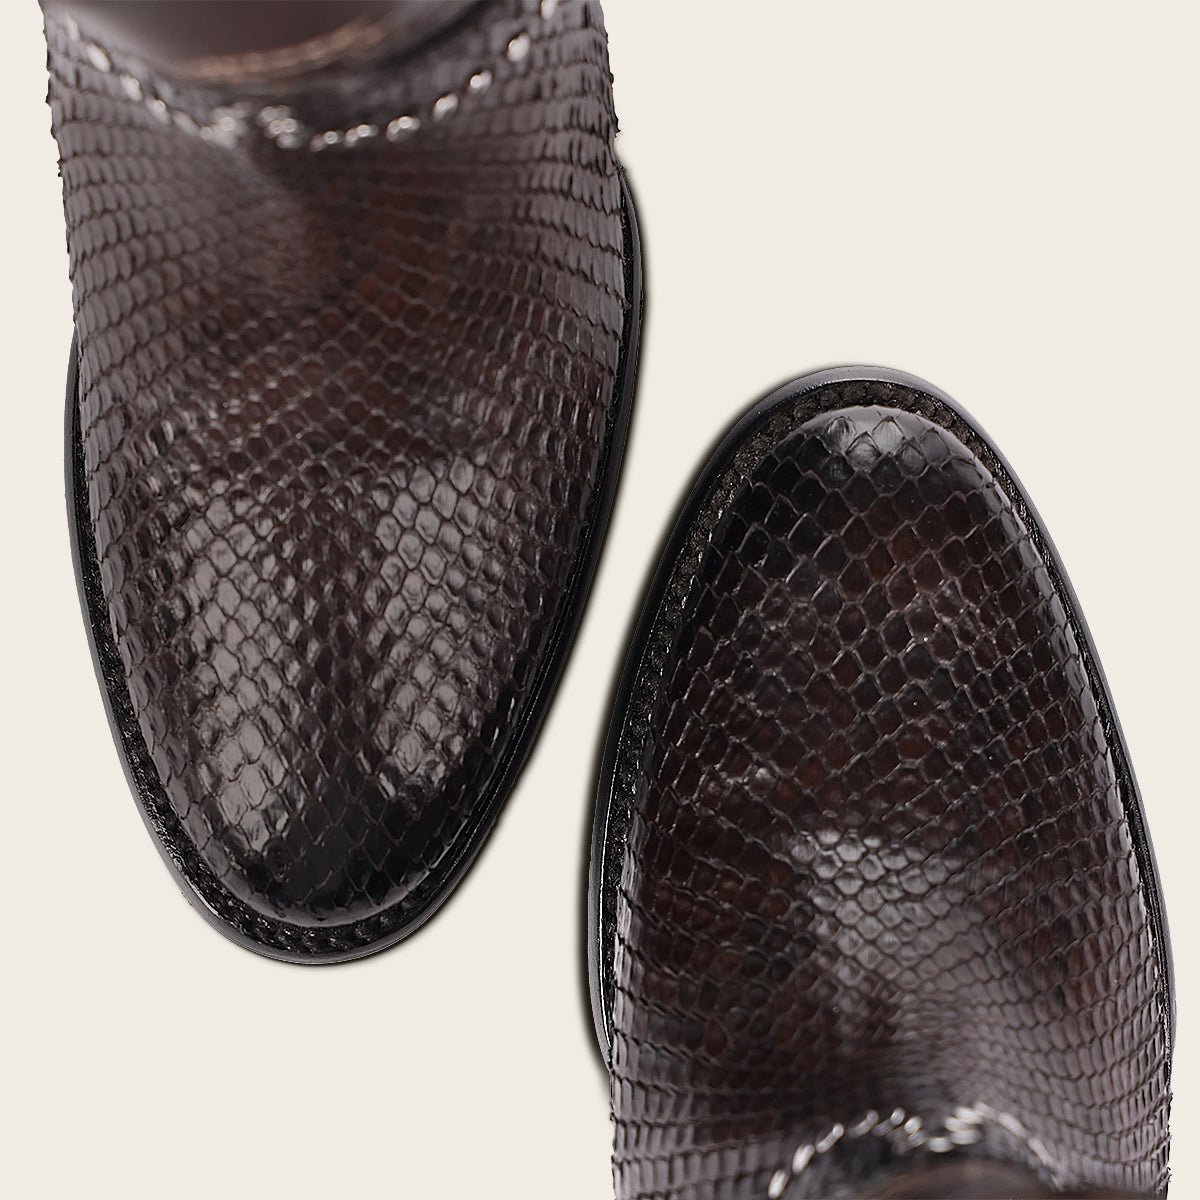 Handmade dark brown exotic leather western style boot